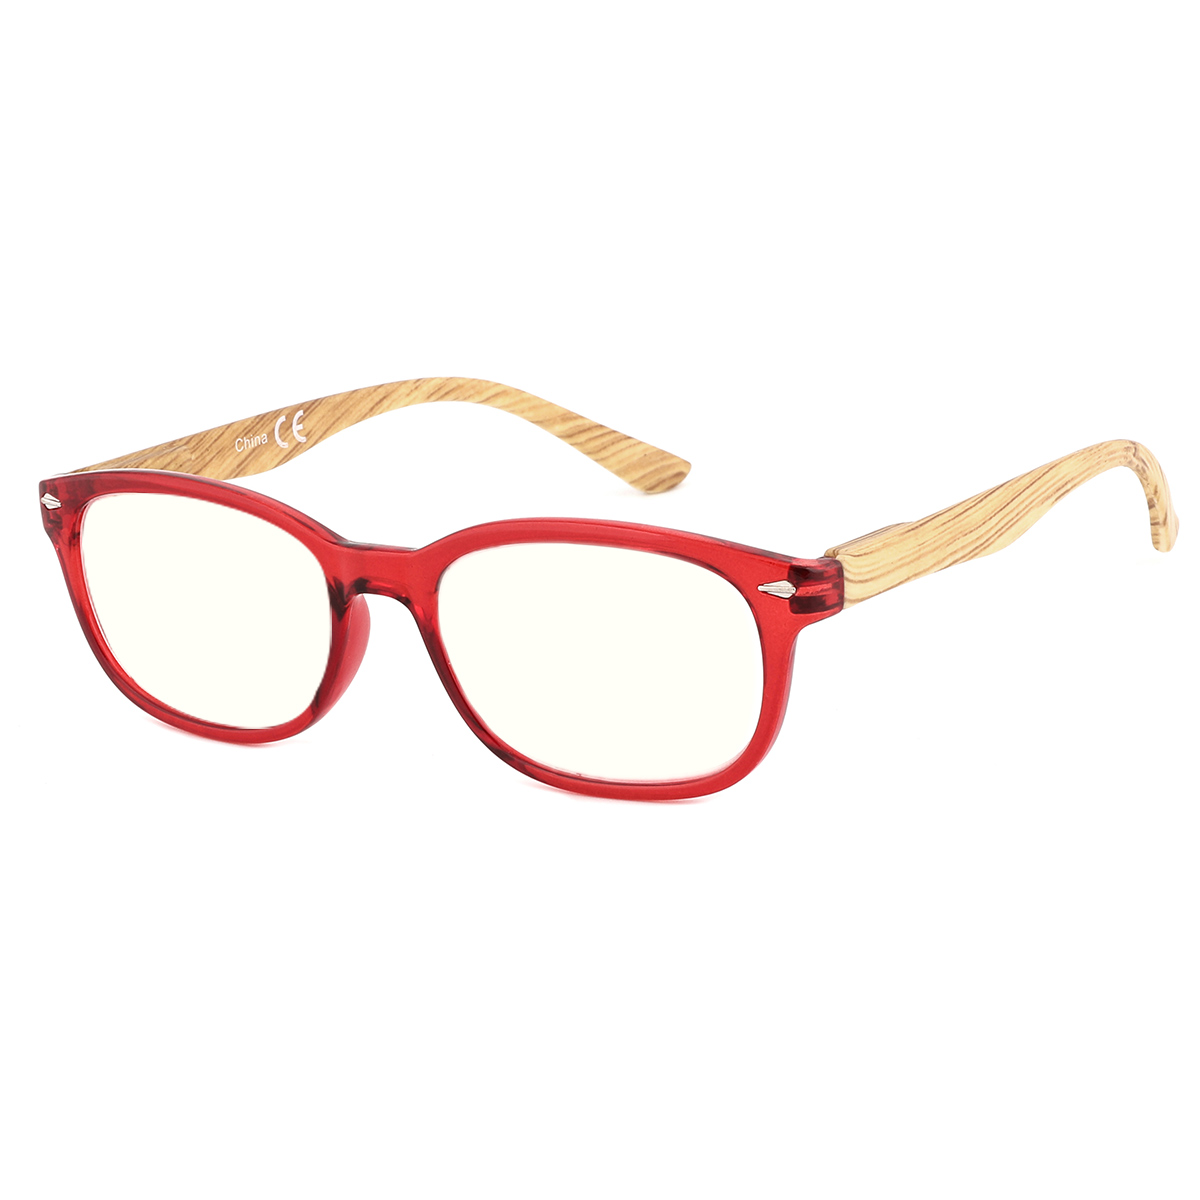 Locus - Oval Red-Wood Reading Glasses for Men & Women